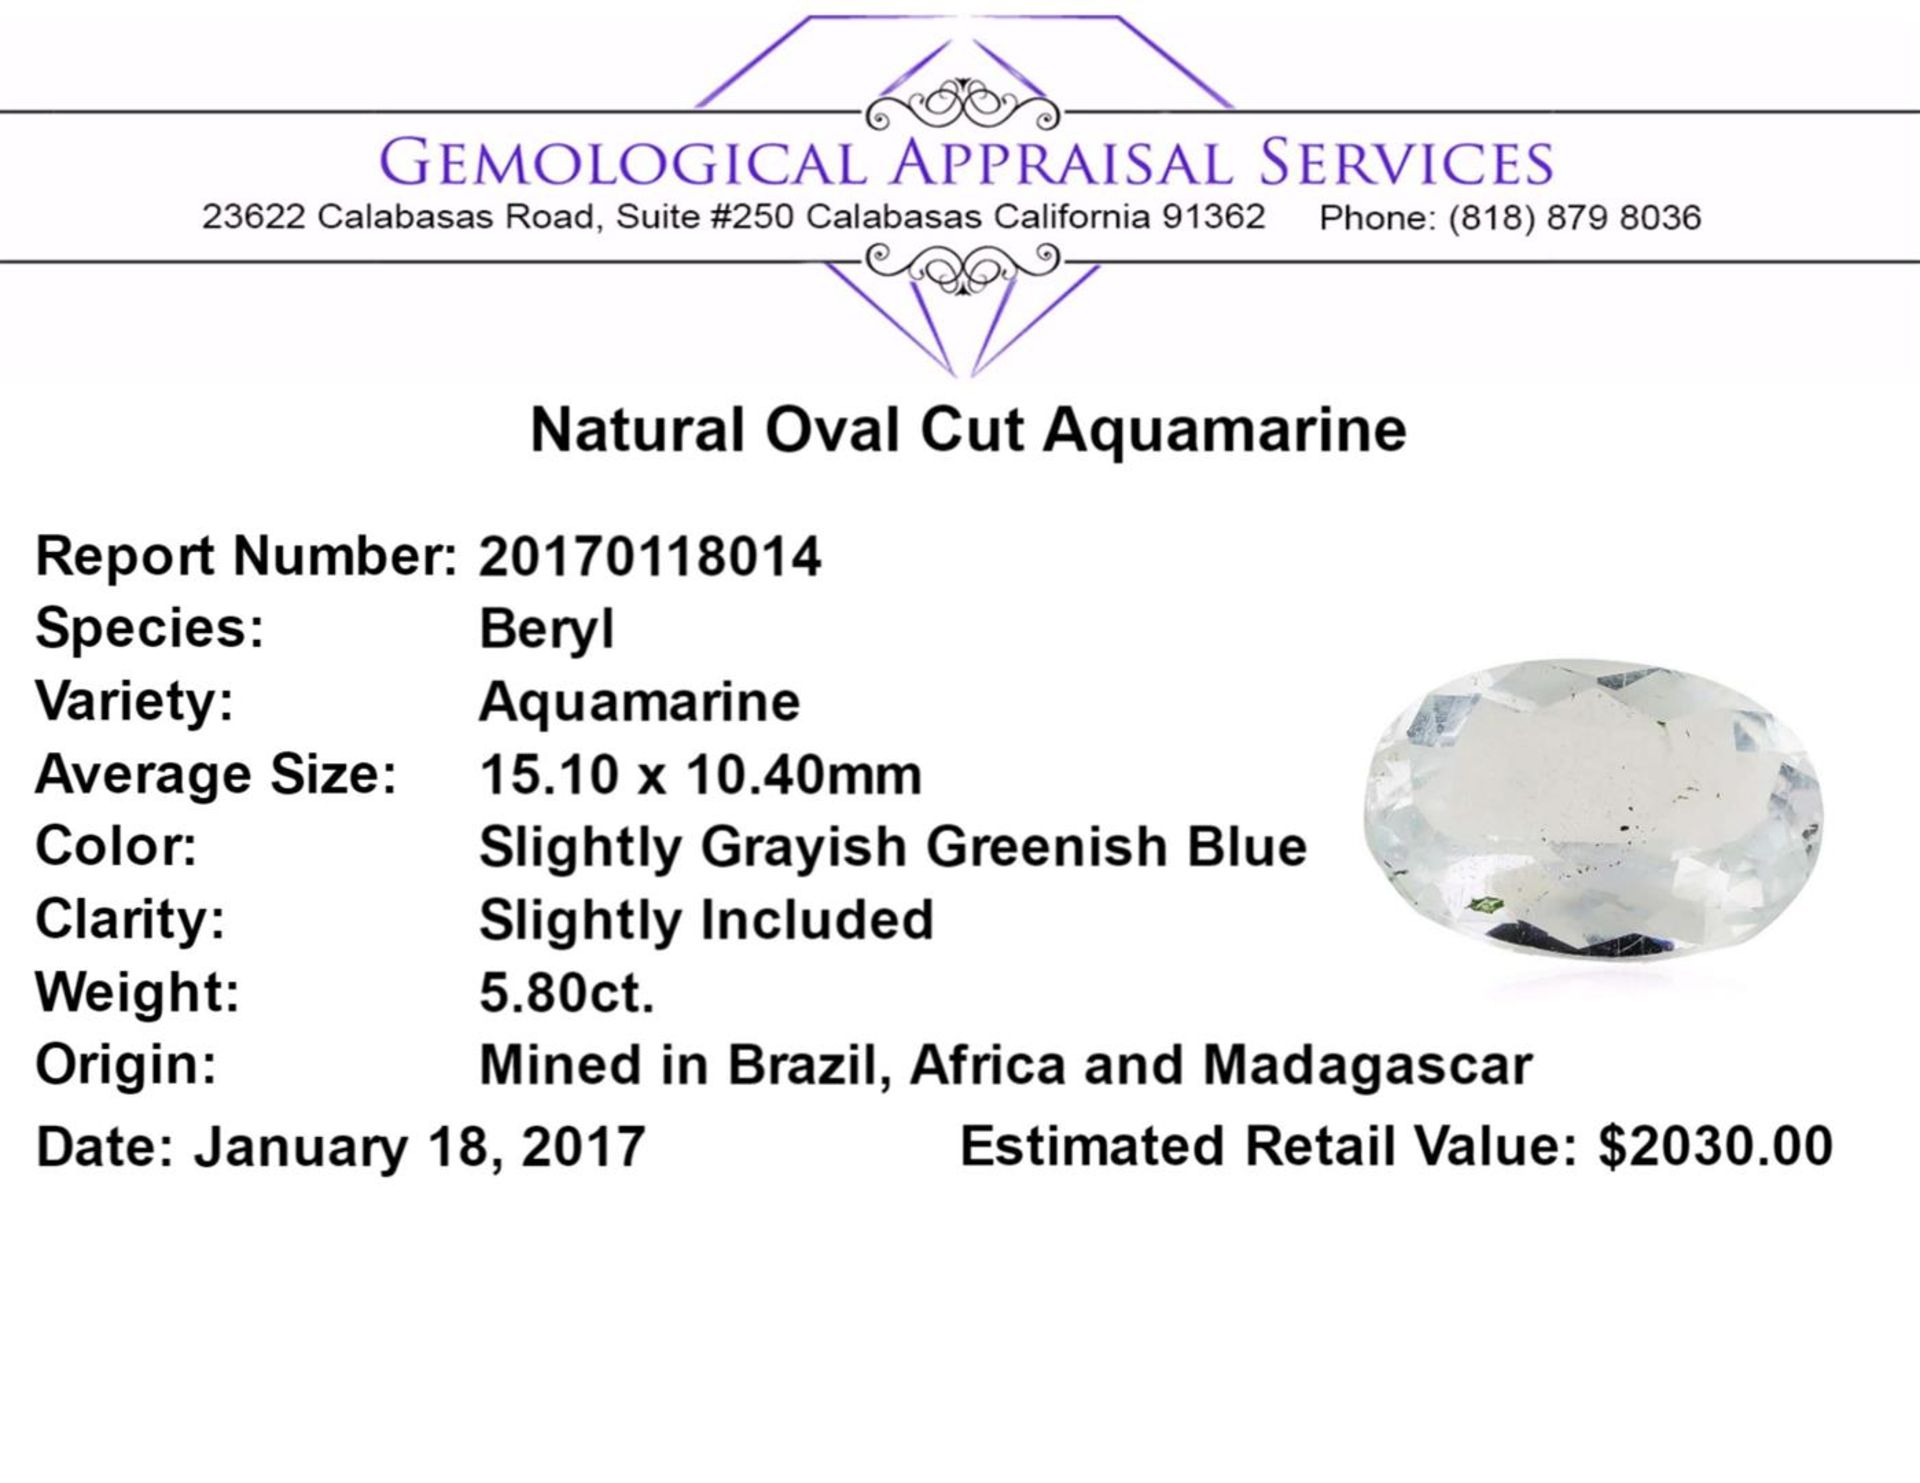 5.80 ct.Natural Oval Cut Aquamarine - Image 2 of 2